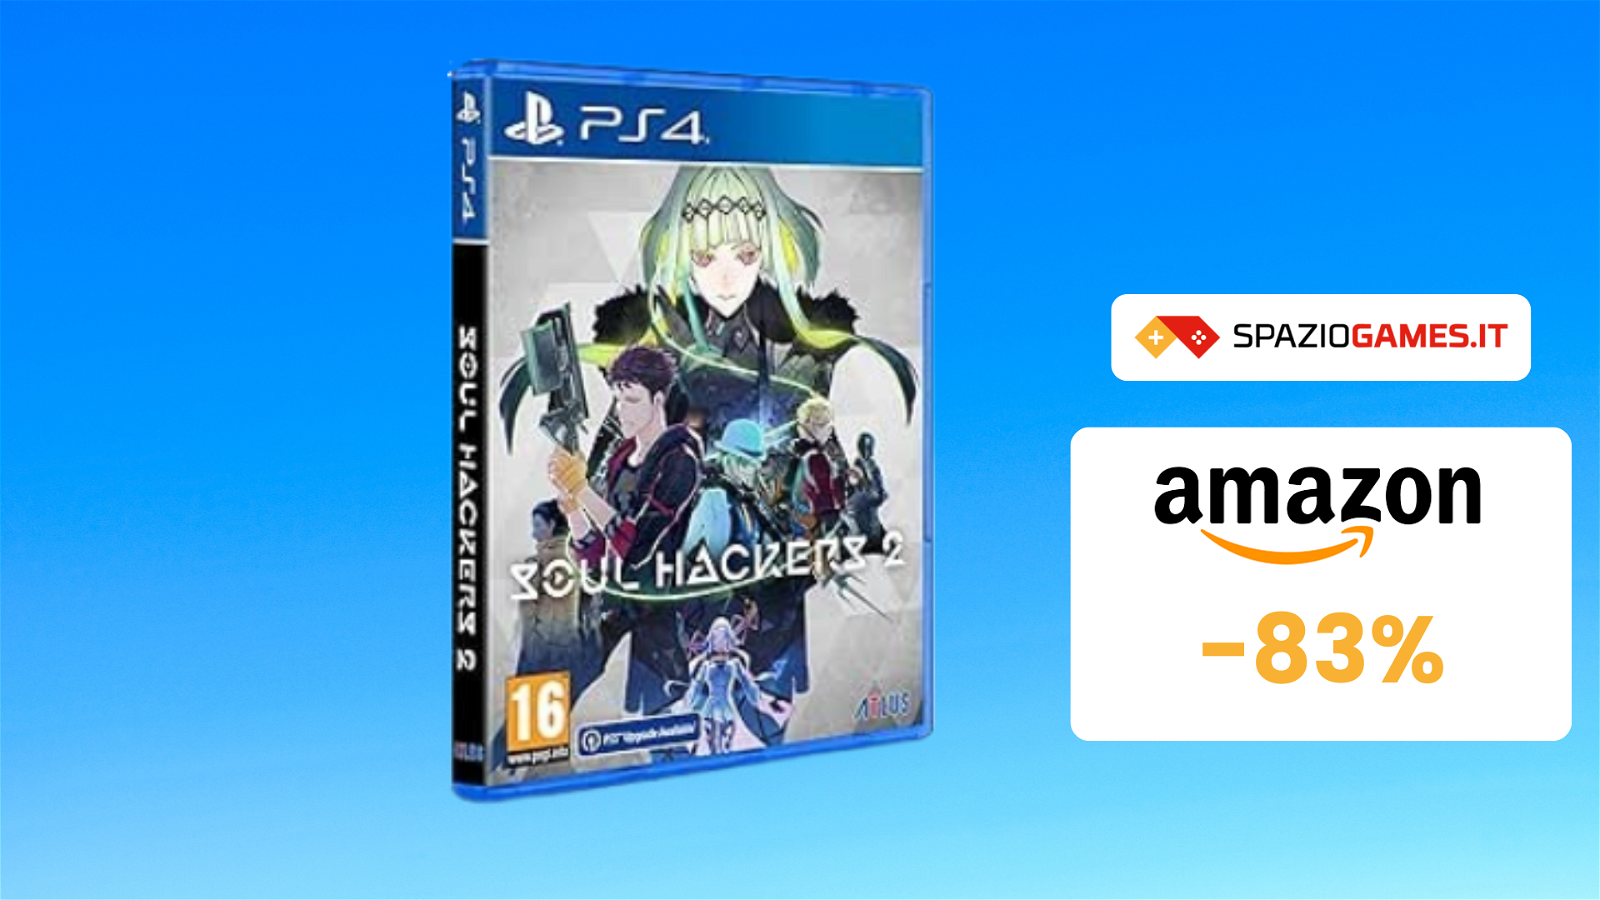 Soul Hackers 2 per PS4 a soli 10€! IMPERDIBILE! -83%!